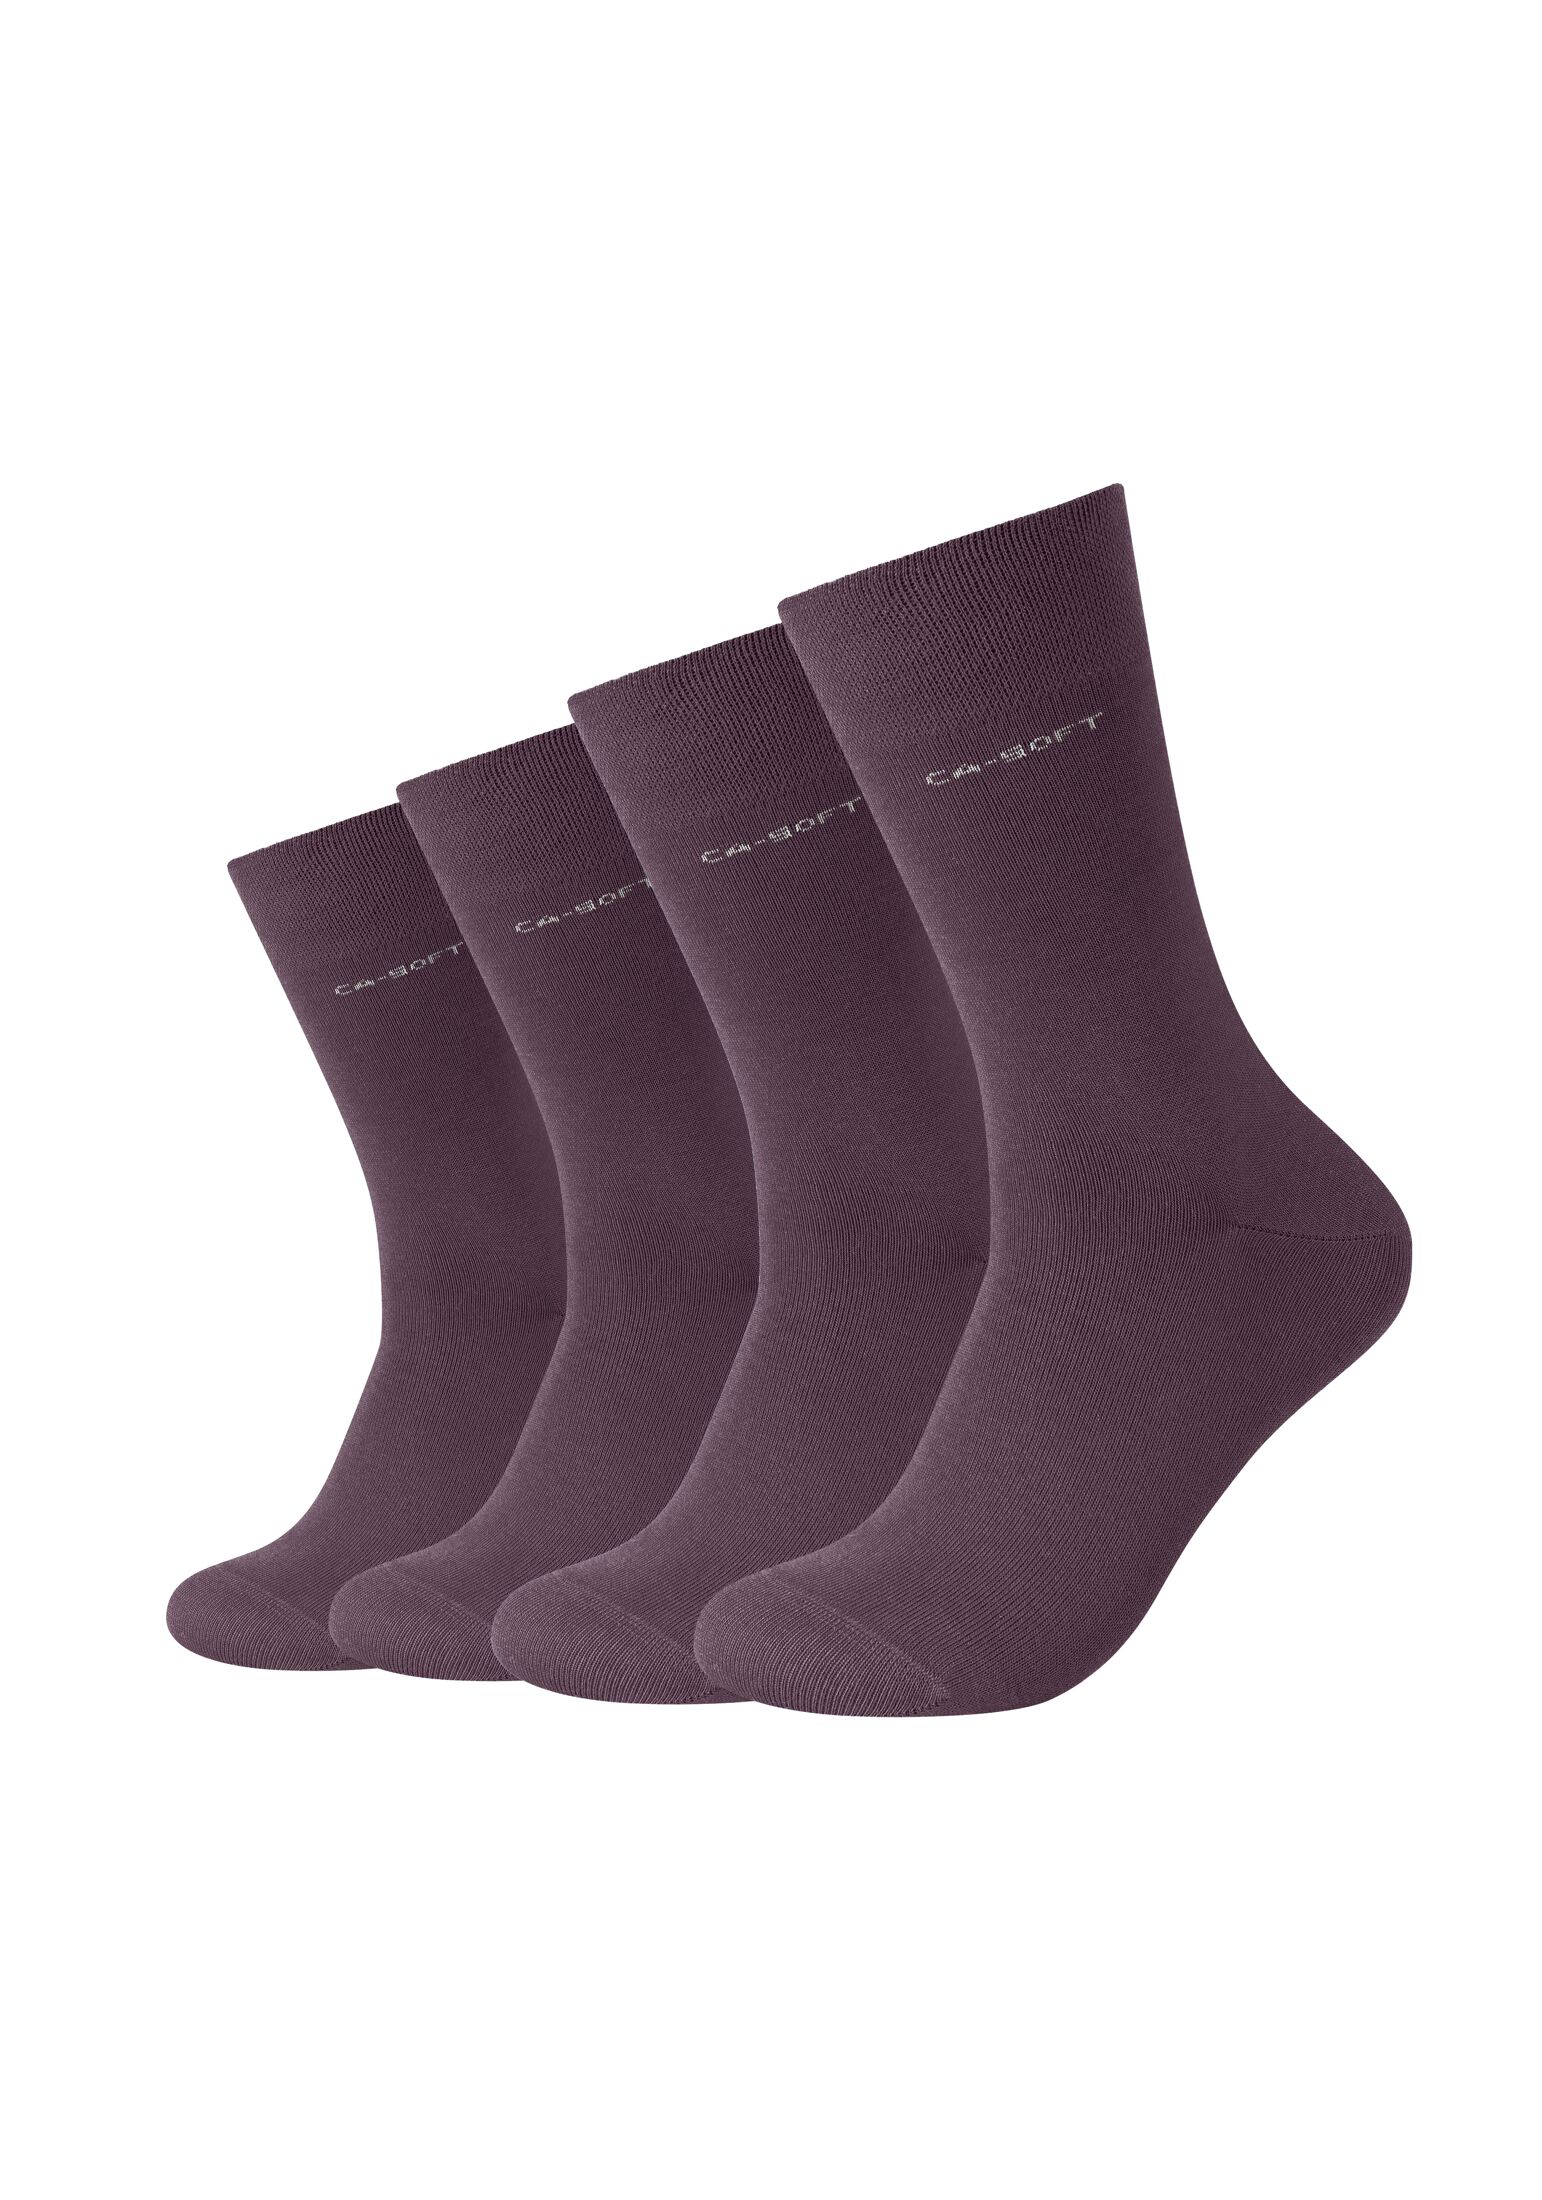 ботинки mols boots sannata цвет 4081 potent purple Носки camano verstärktem Fersen und Zehenbereich 4 шт ca soft, цвет potent purple